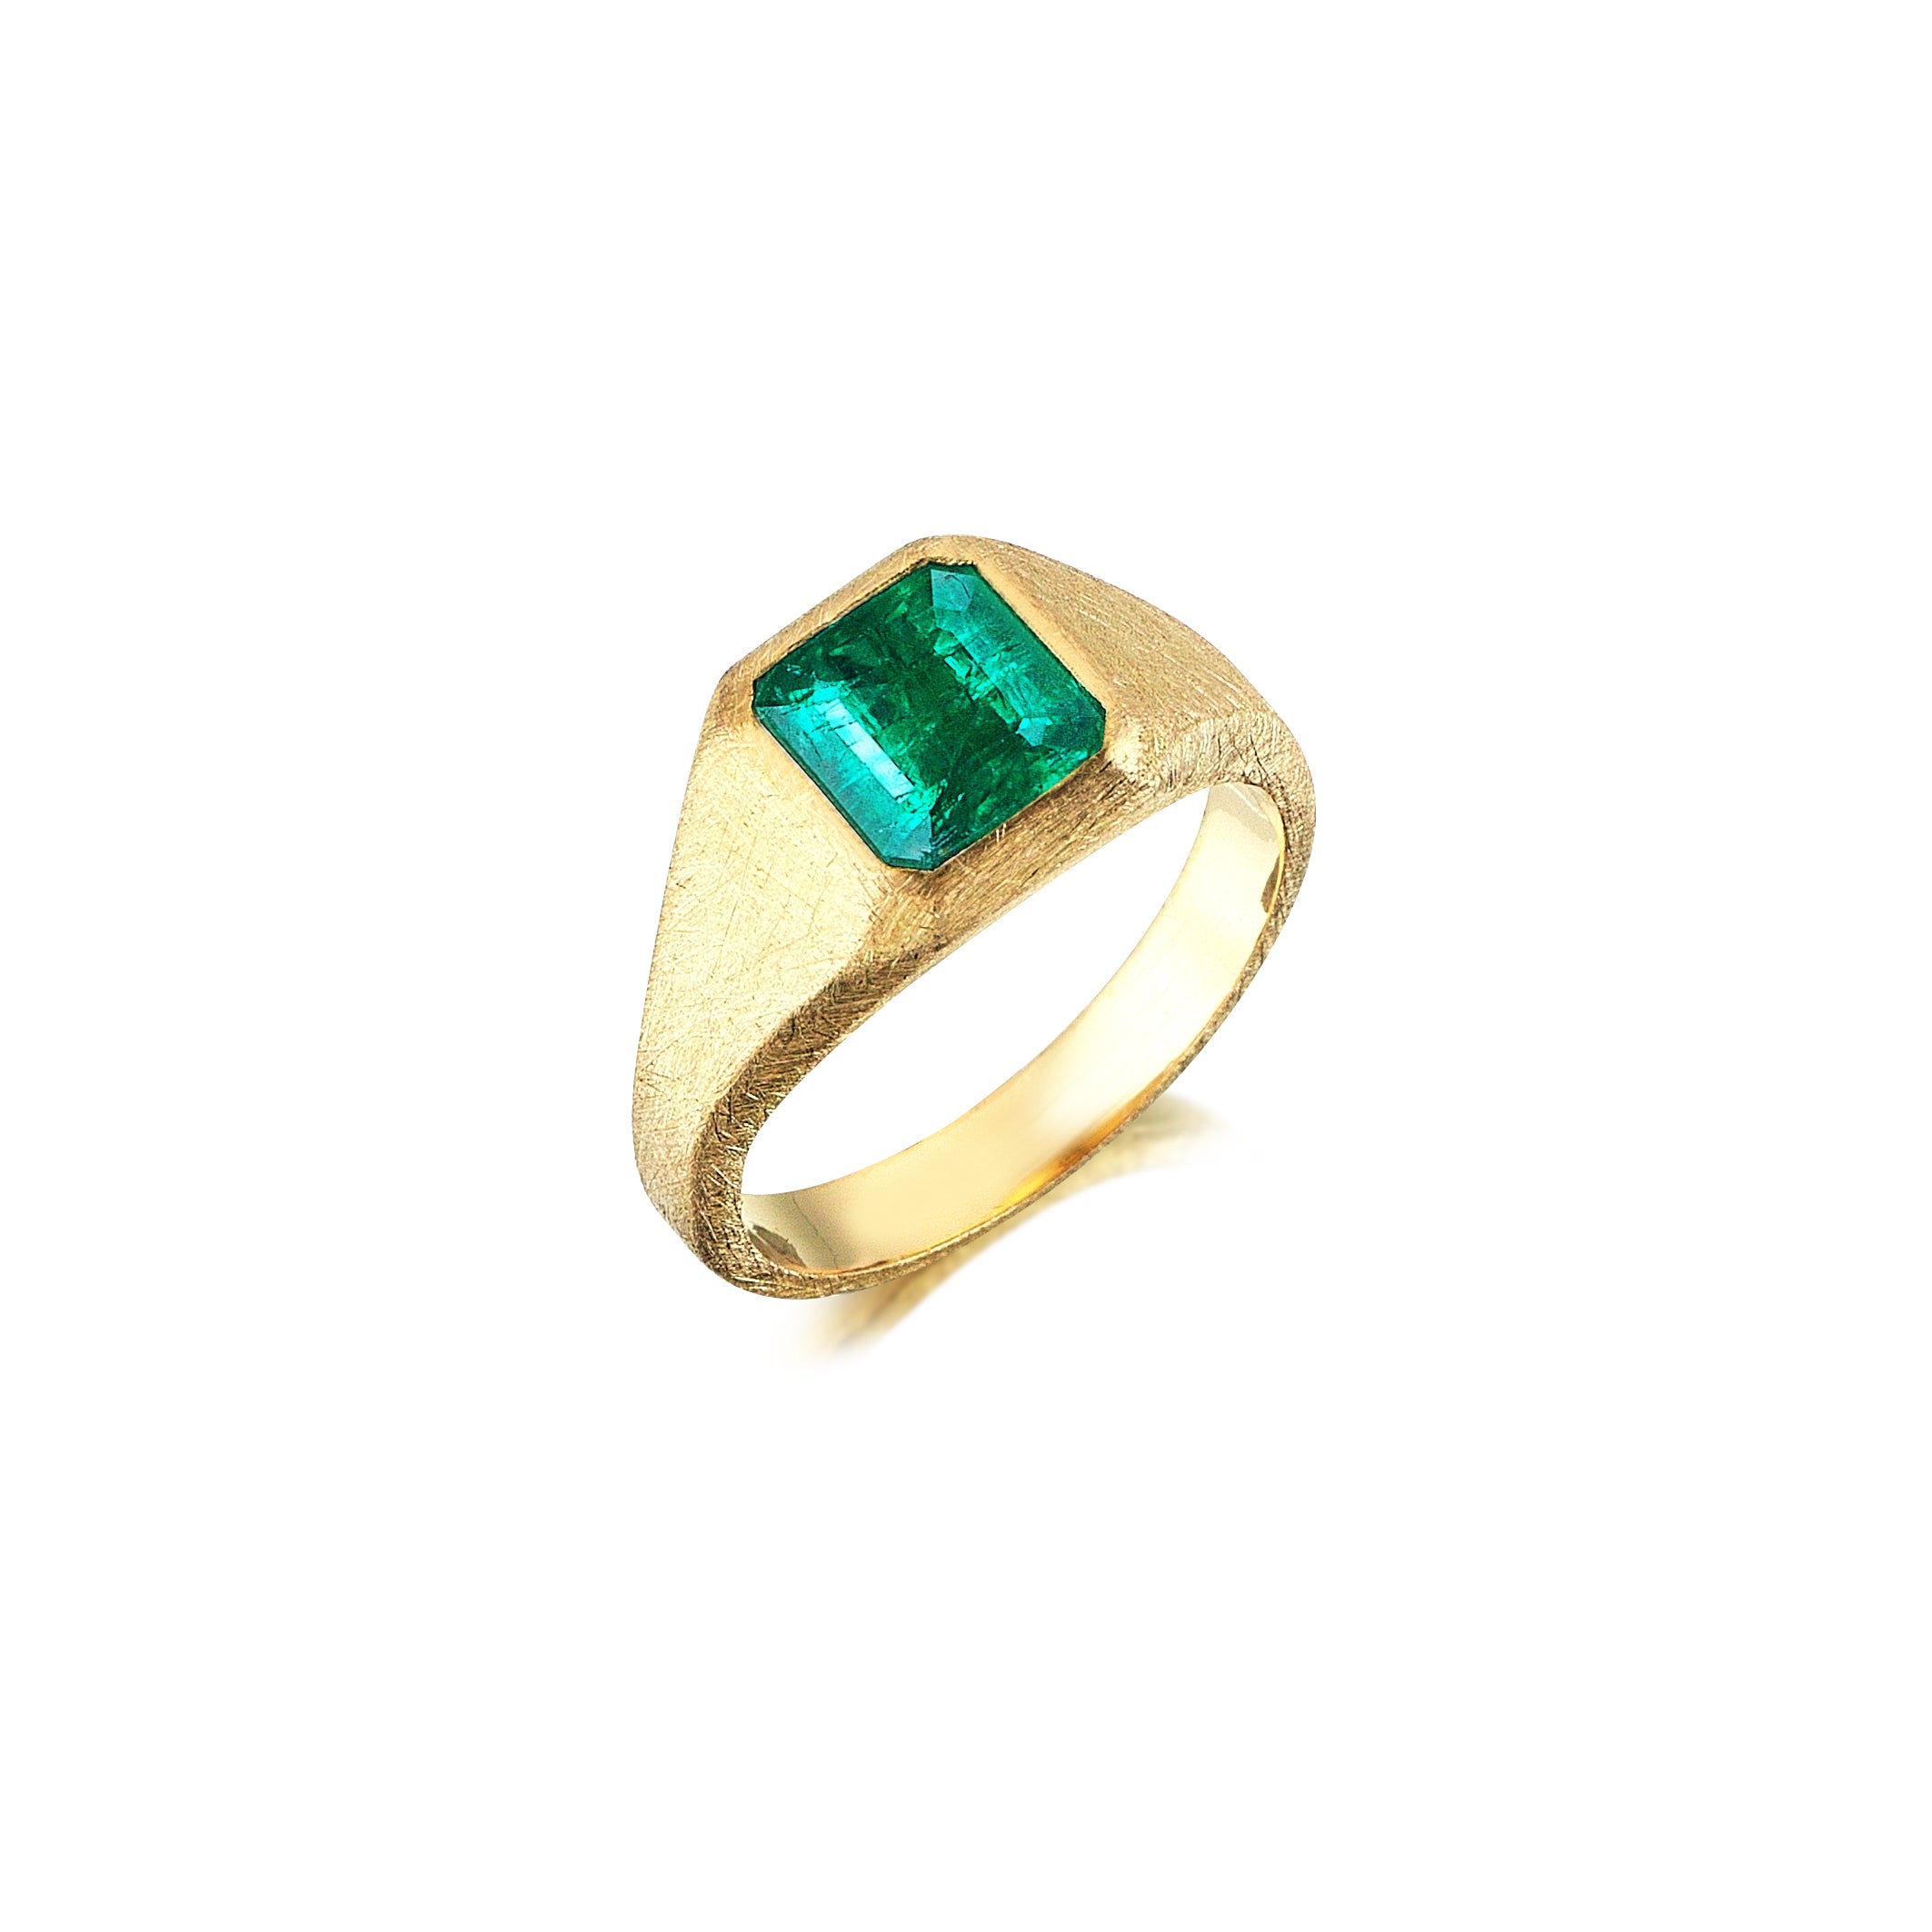 The Zambian Emerald Ring